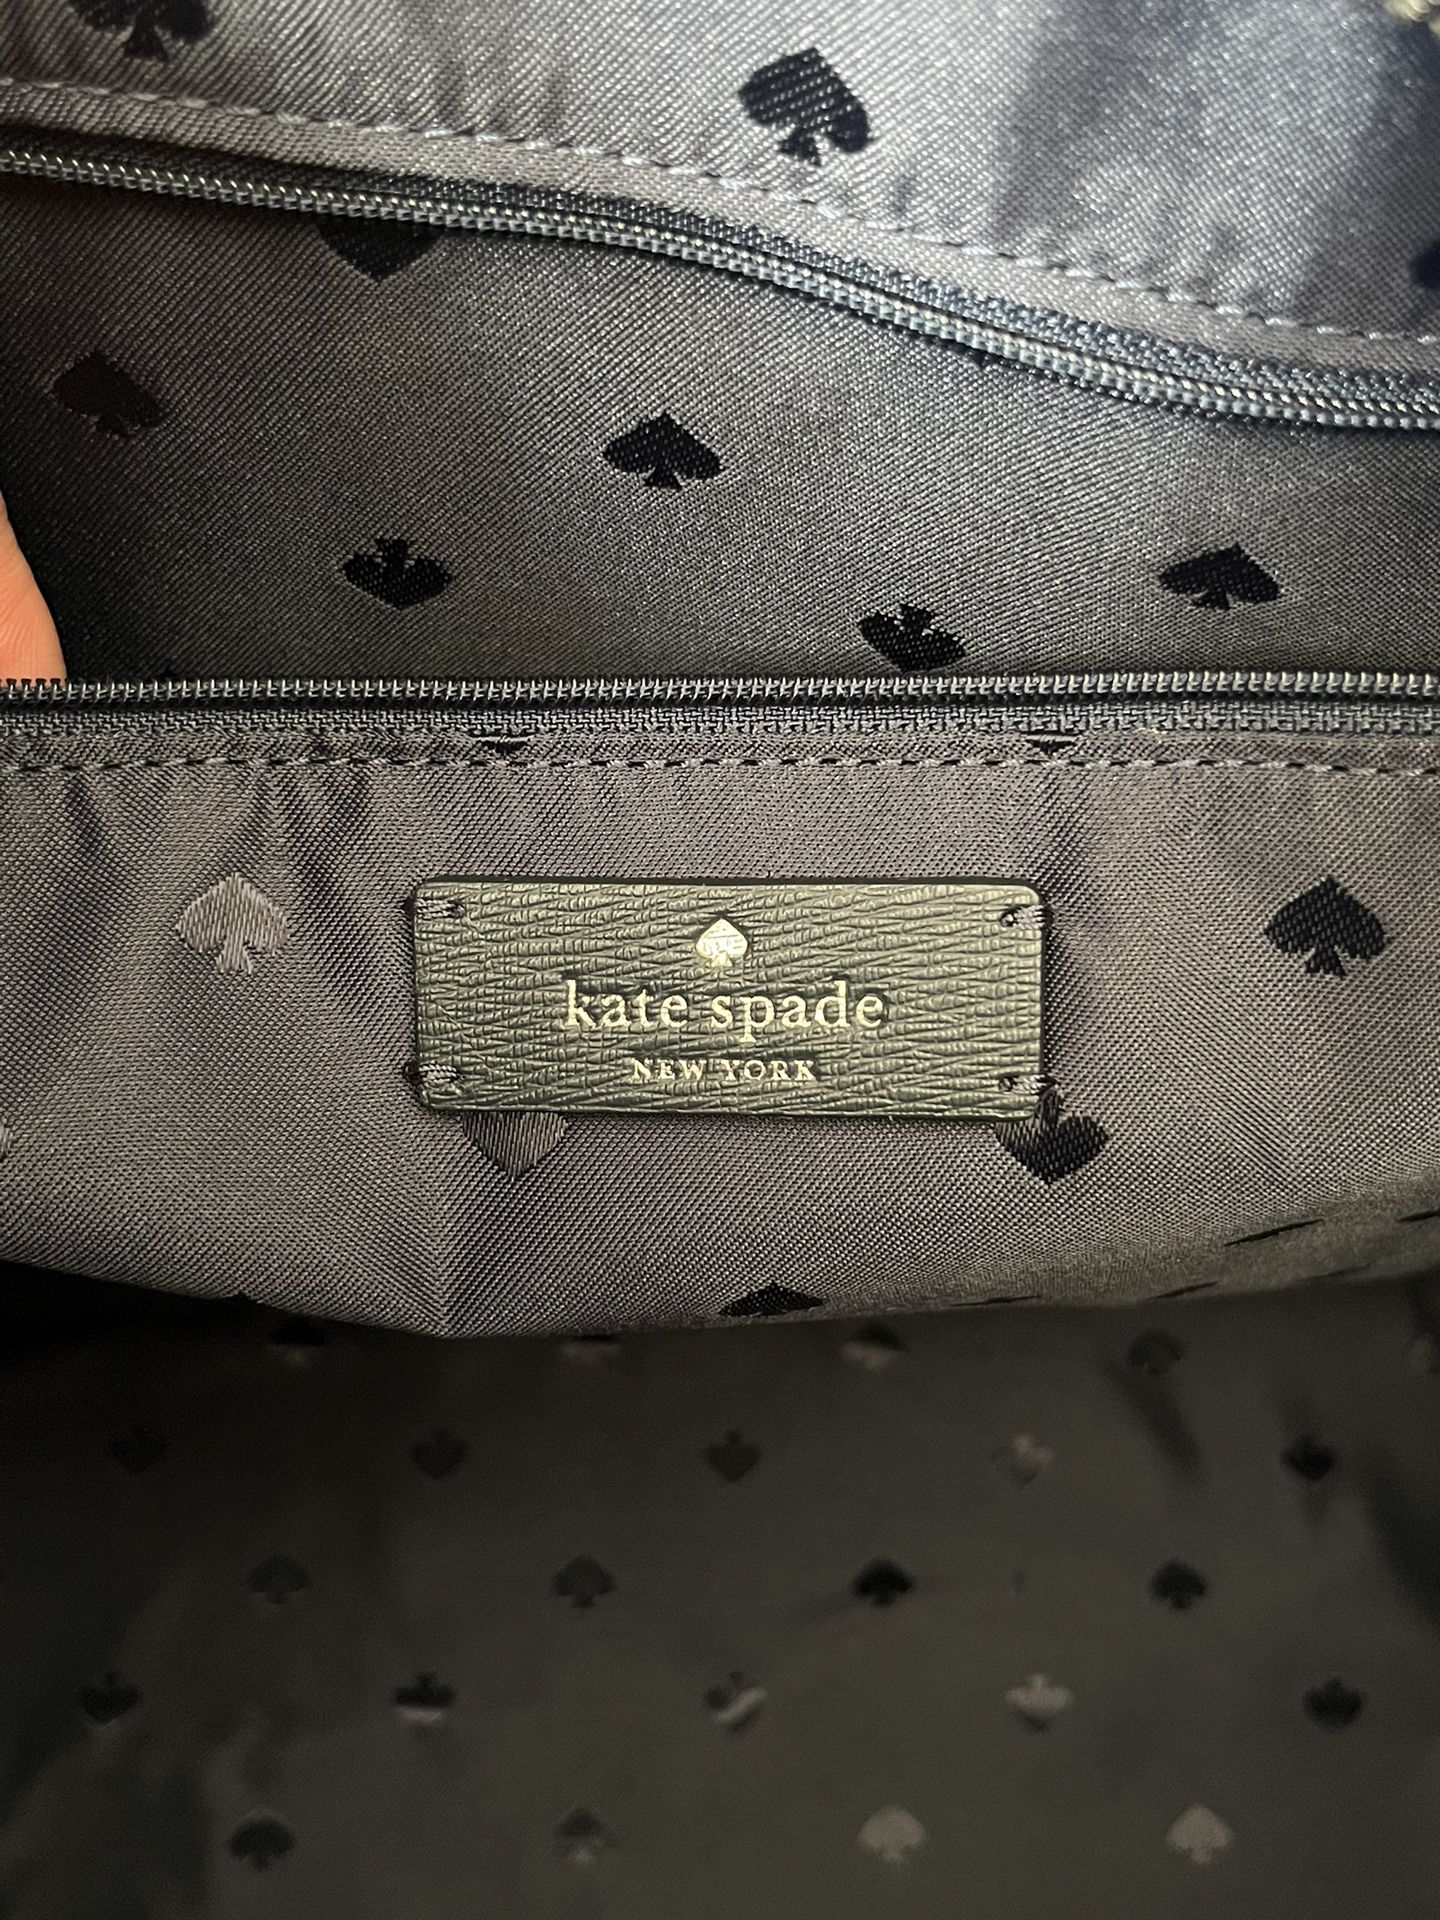 How to spot a FAKE Kate Spade Bag